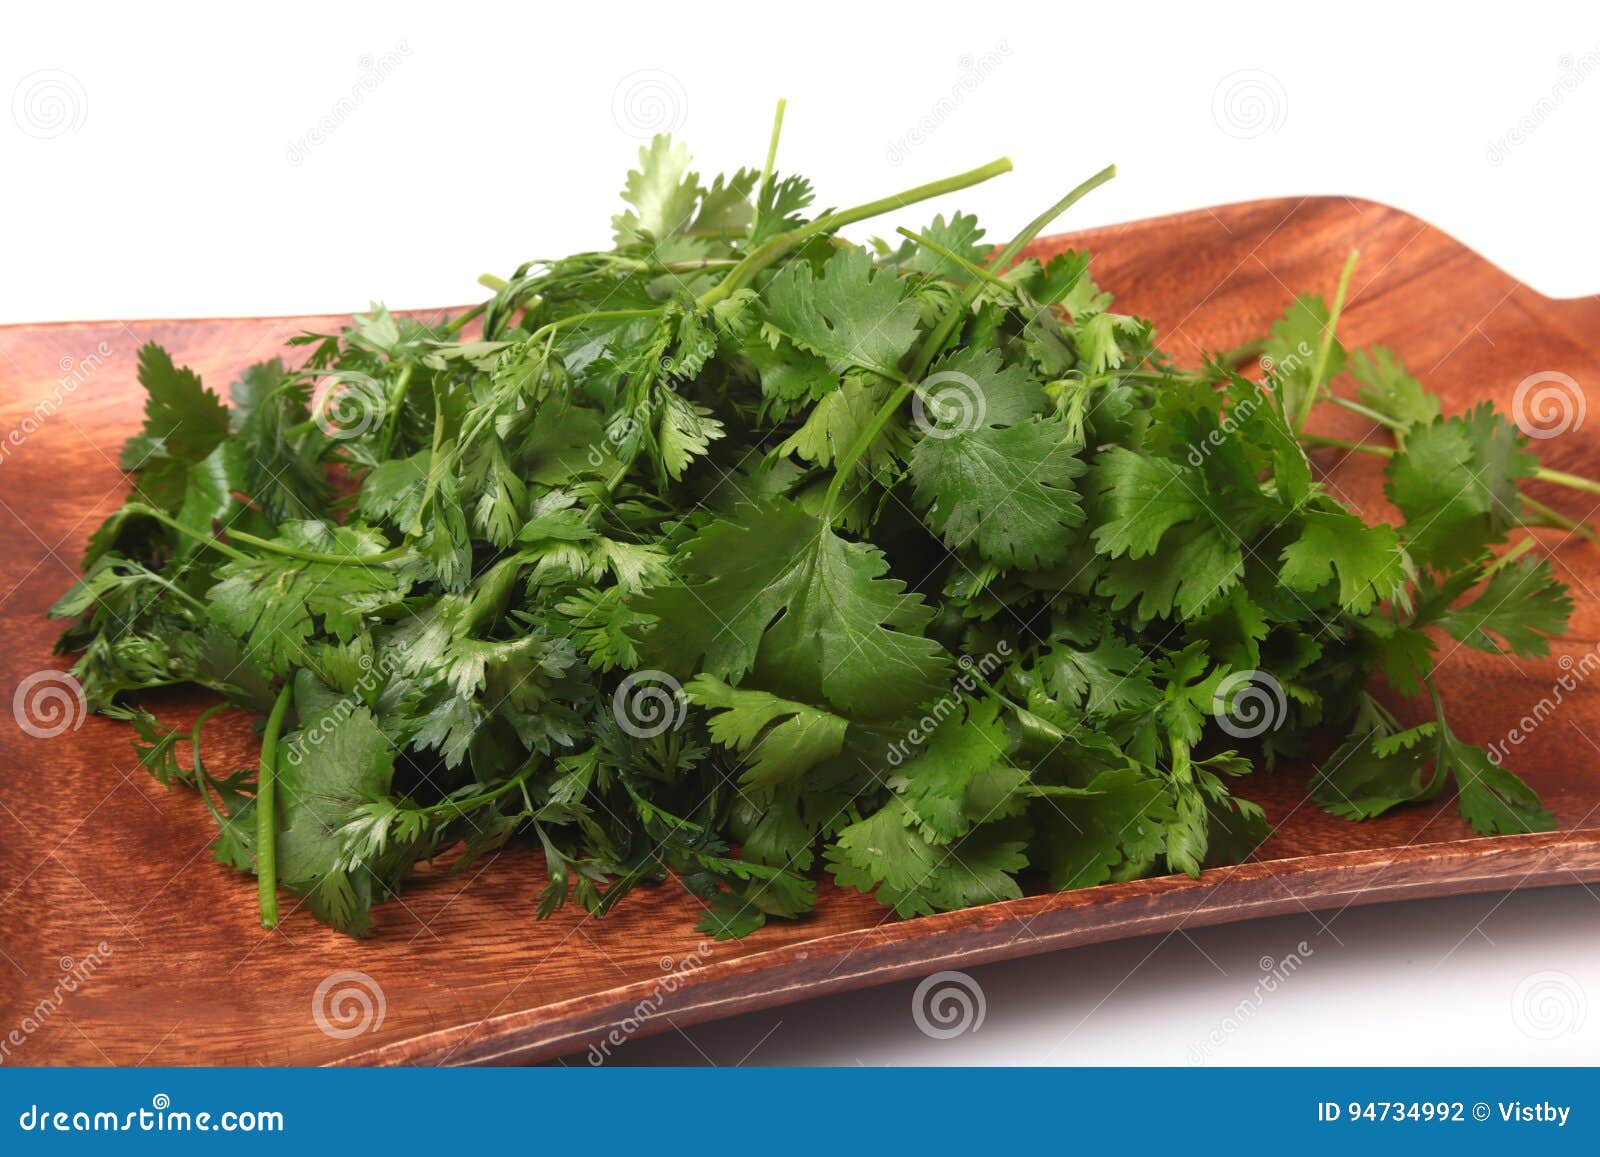 Fresh green cilantro, coriander leaves on wooden board.